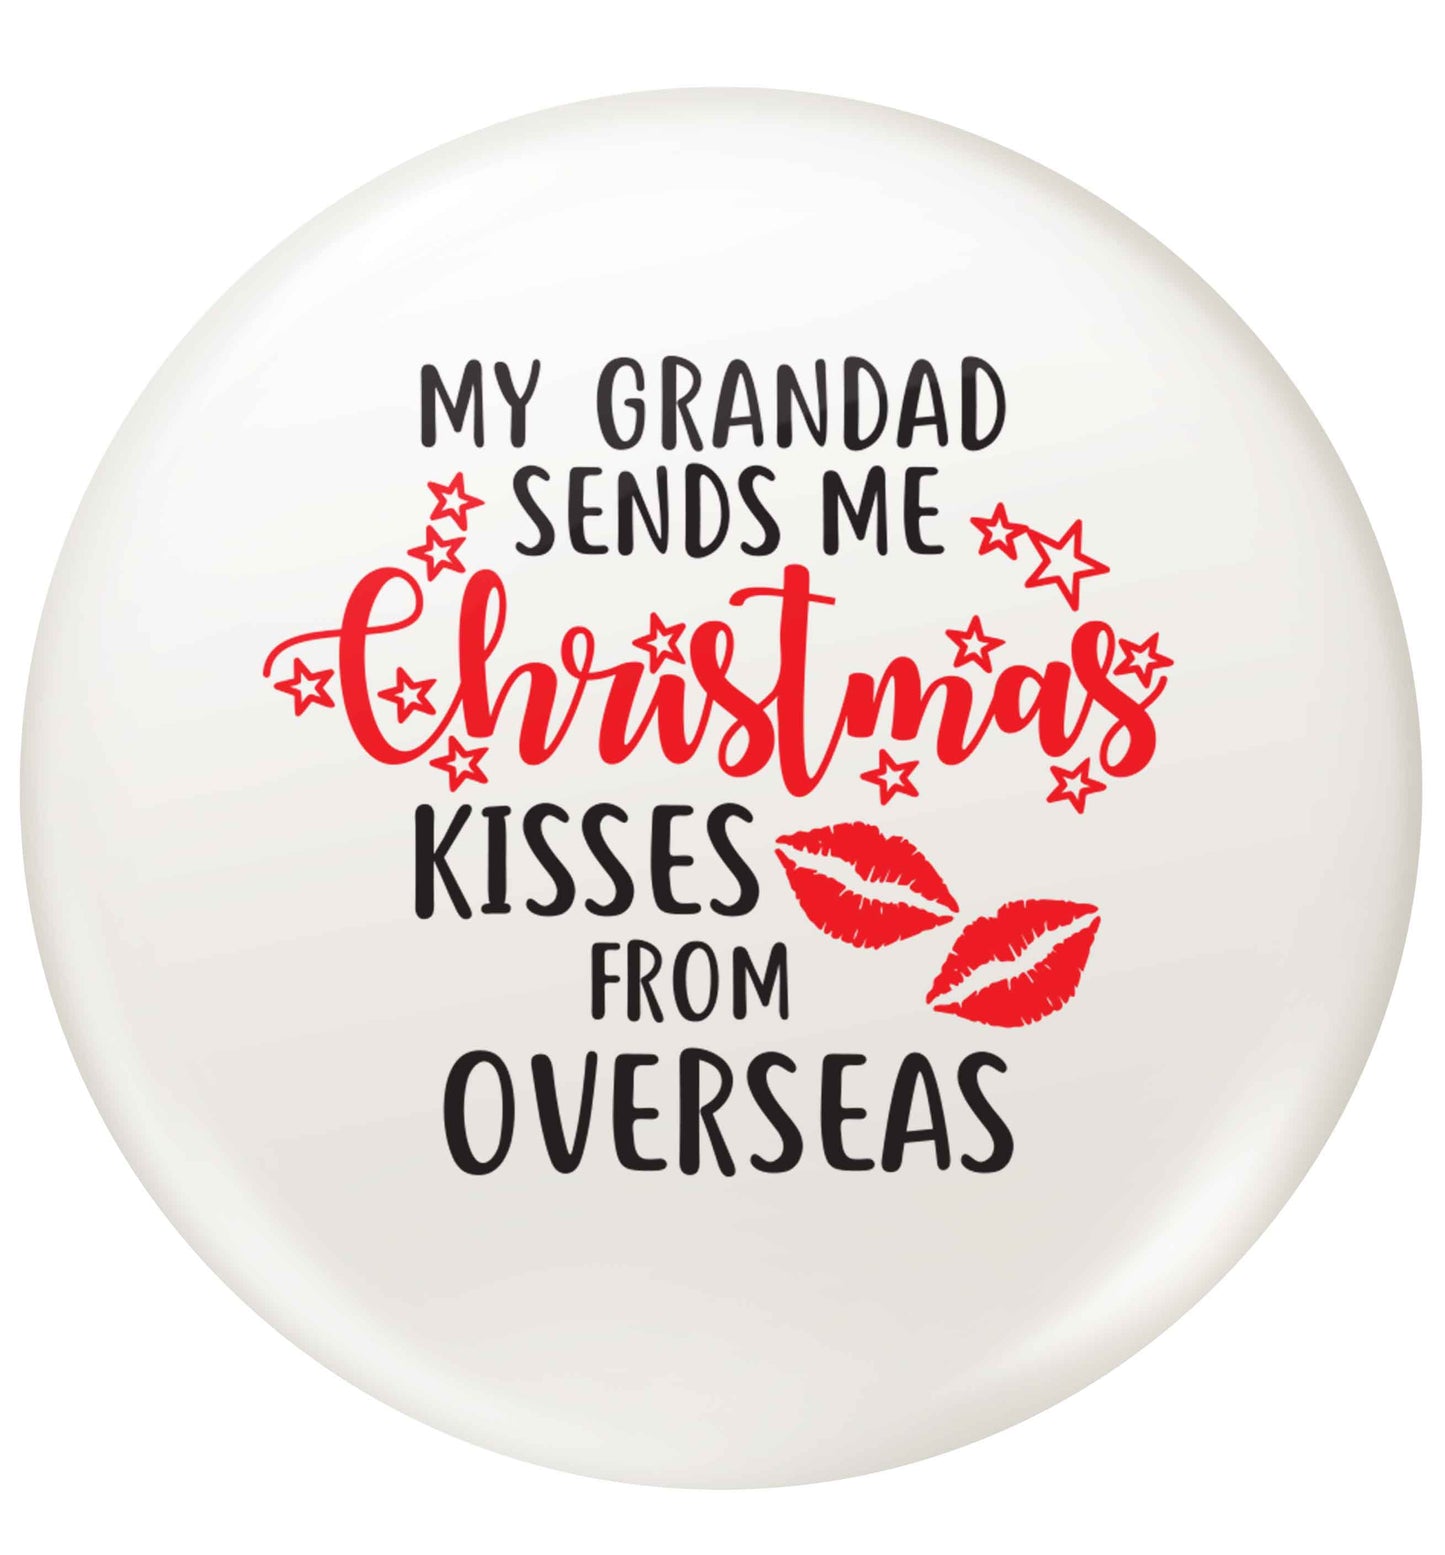 Grandad Christmas Kisses Overseas small 25mm Pin badge